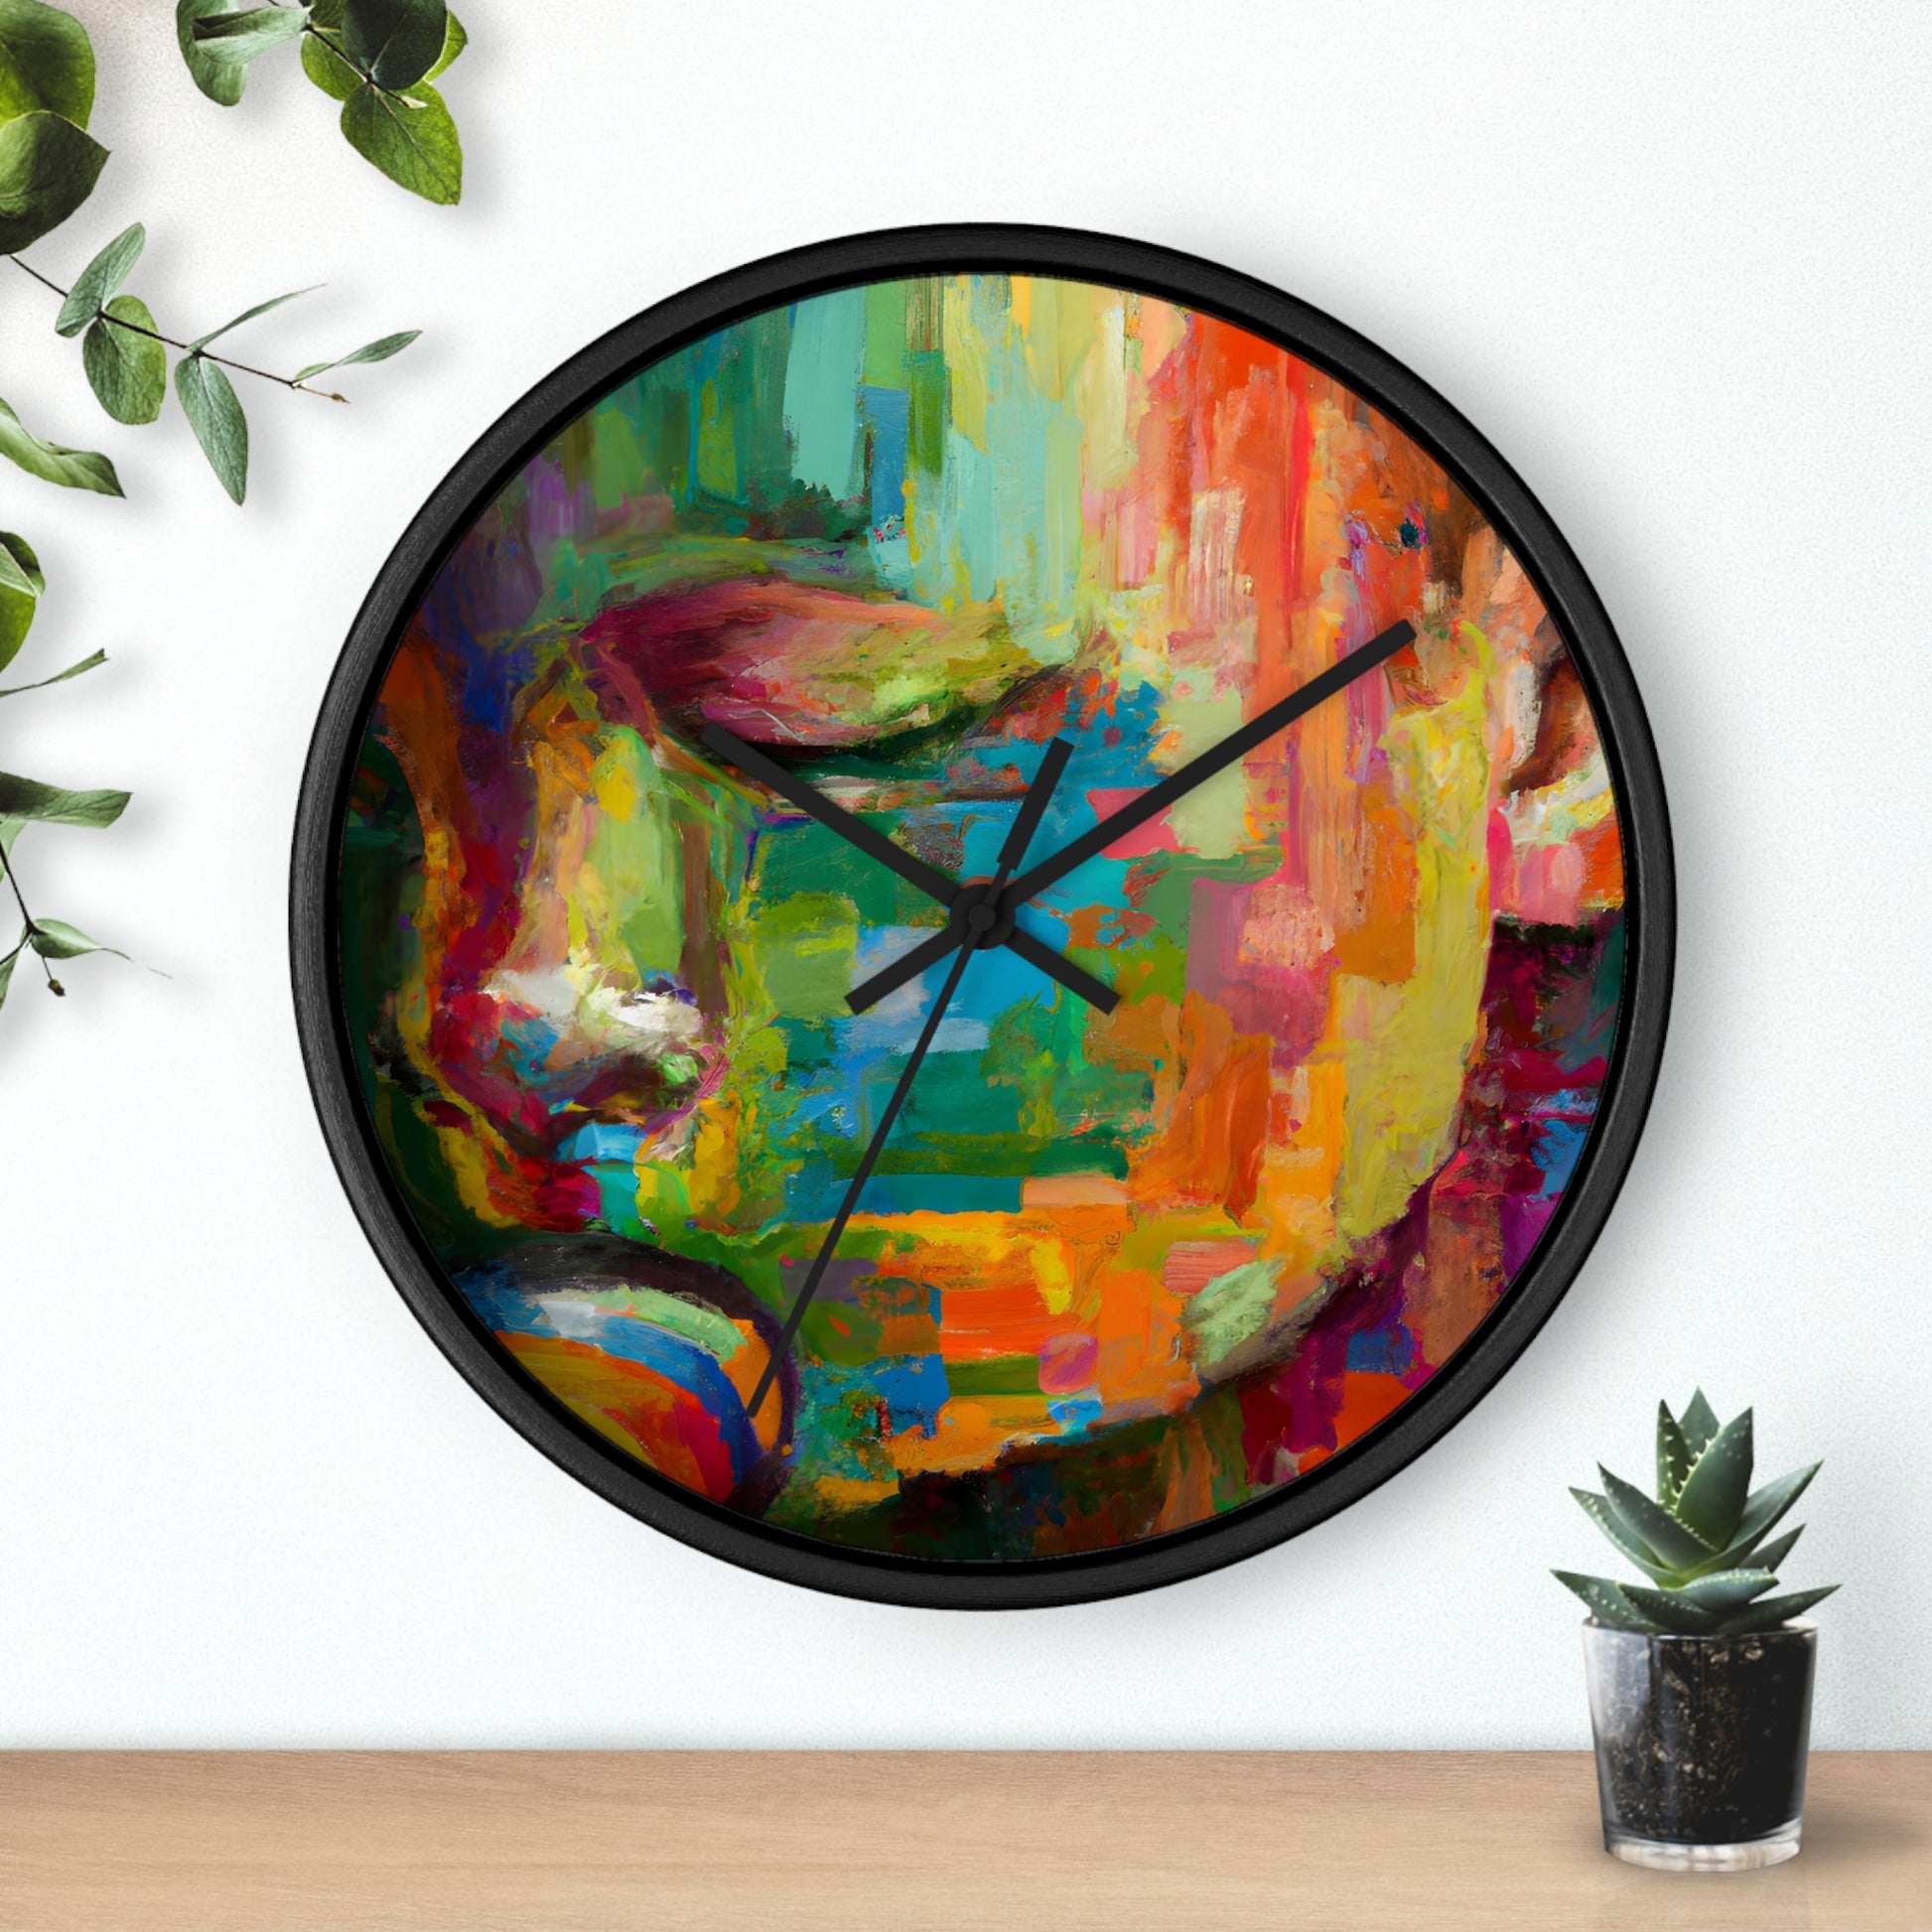 Vitalia - Autism-Inspired Wall Clock